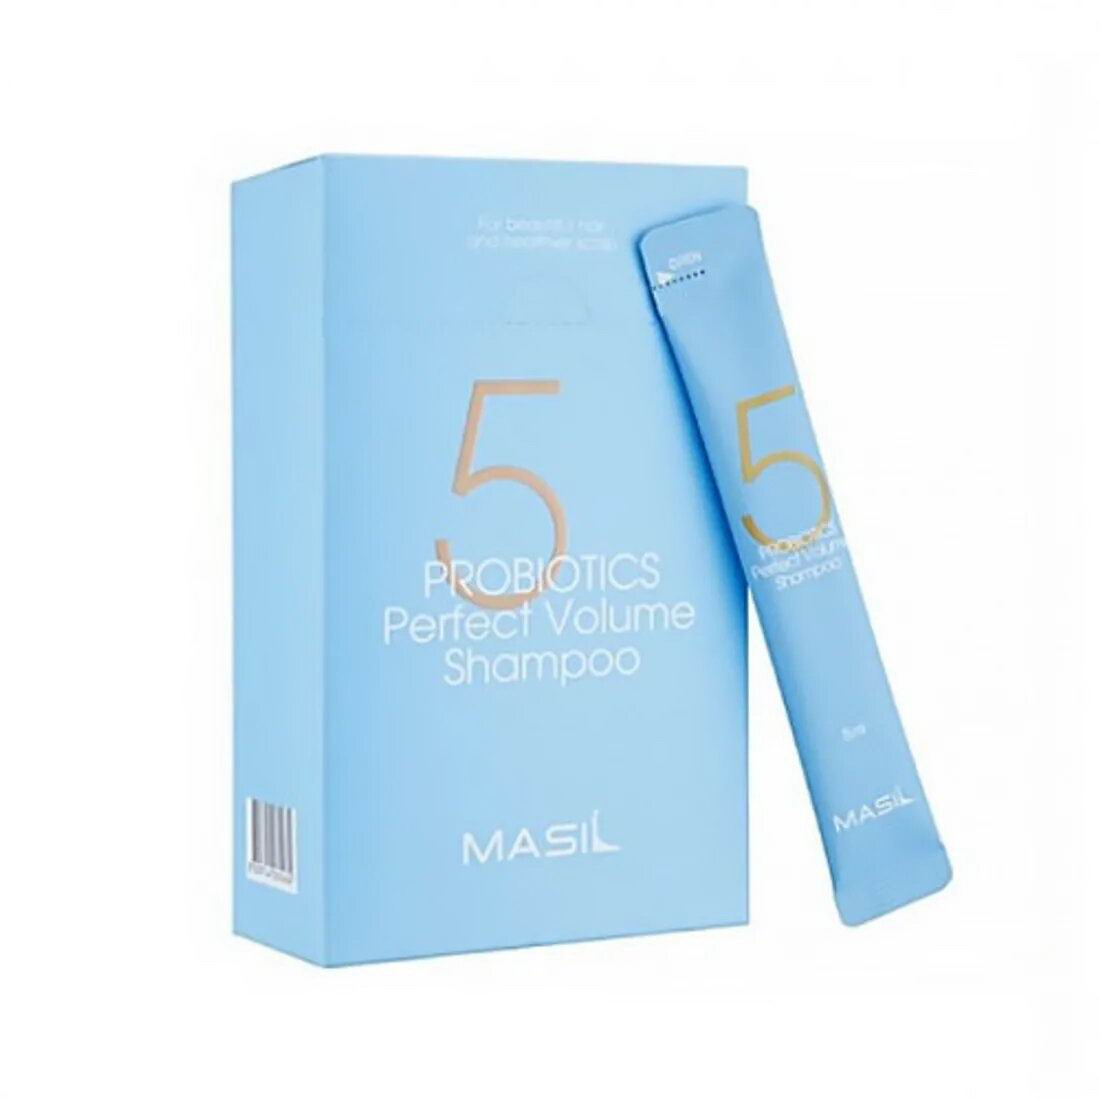 Шампунь MASIL 5 PROBIOTICS PERFECT VOLUME SHAMPOO объём волос с пробиотиками 8млx20 8809744060484